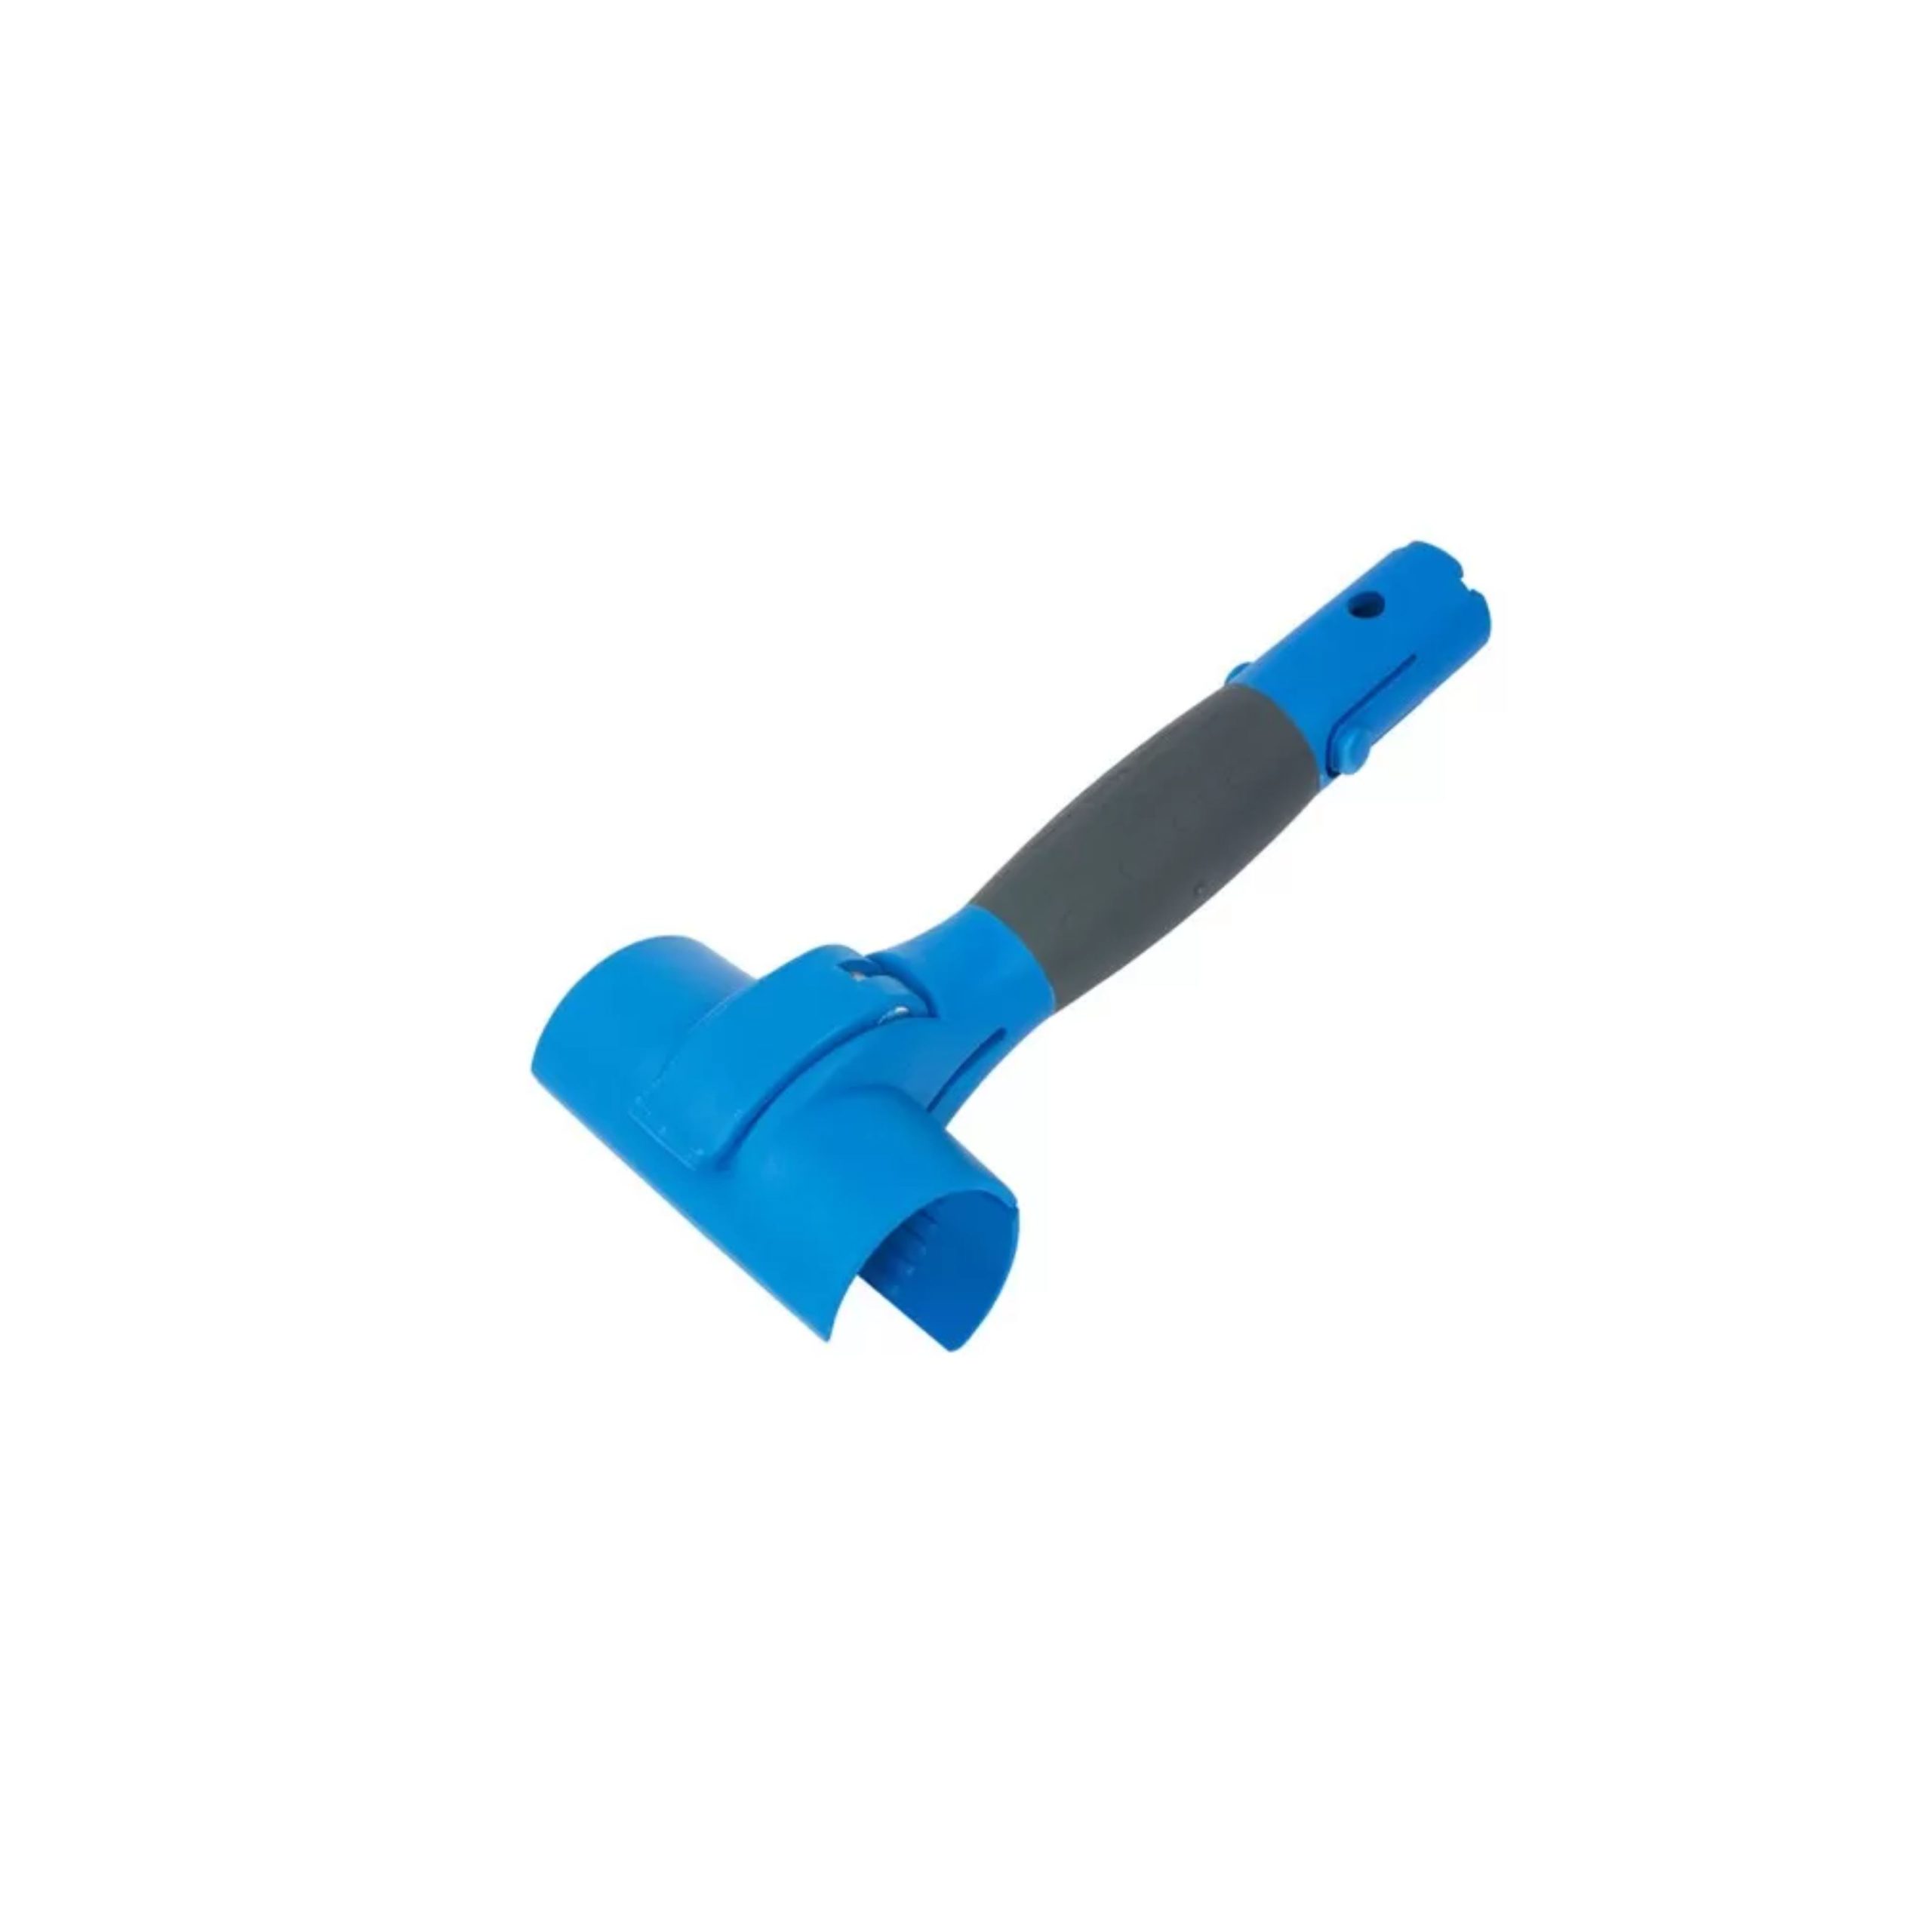 Refina plaziflex spatula and pole